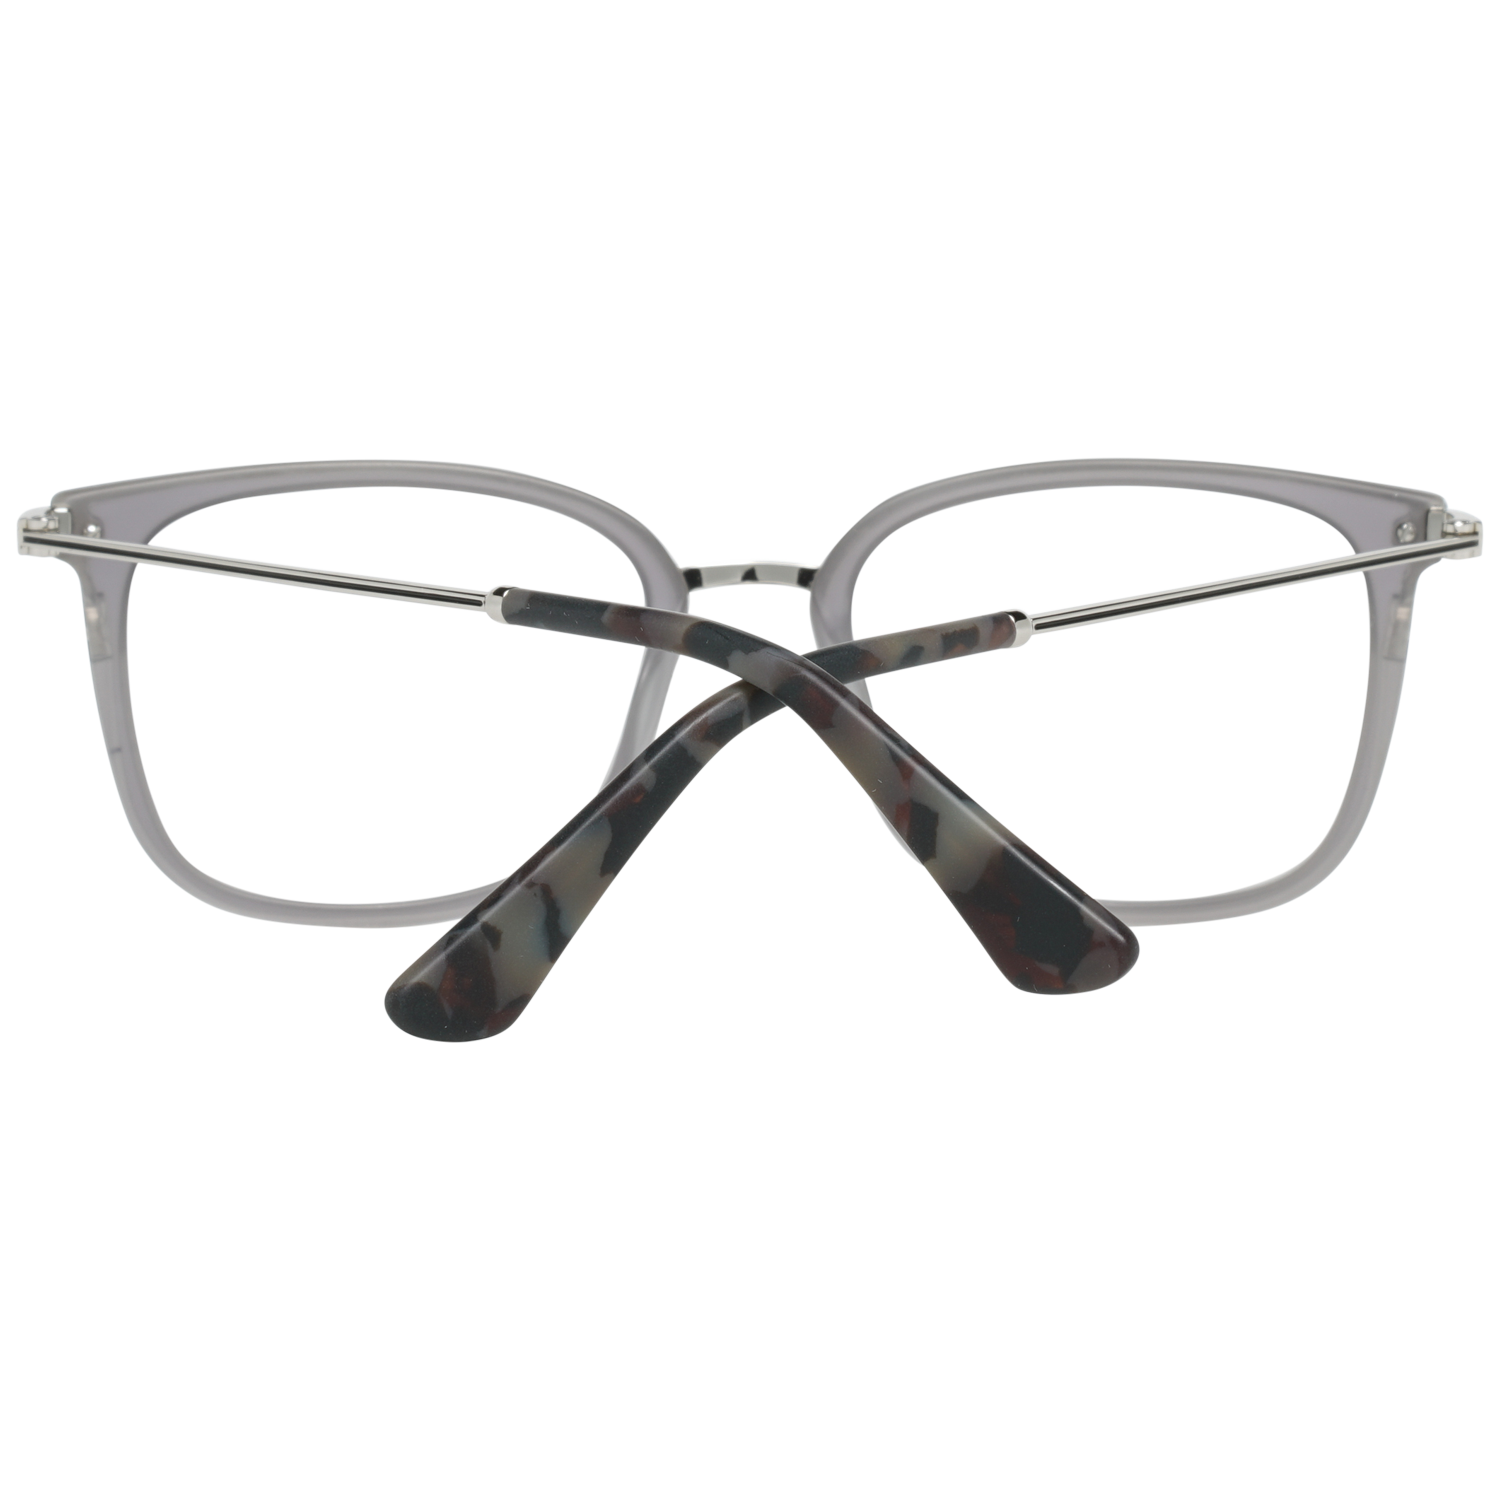 Police Frames Police Glasses Frames VPL561 M78M 51 Eyeglasses Eyewear UK USA Australia 